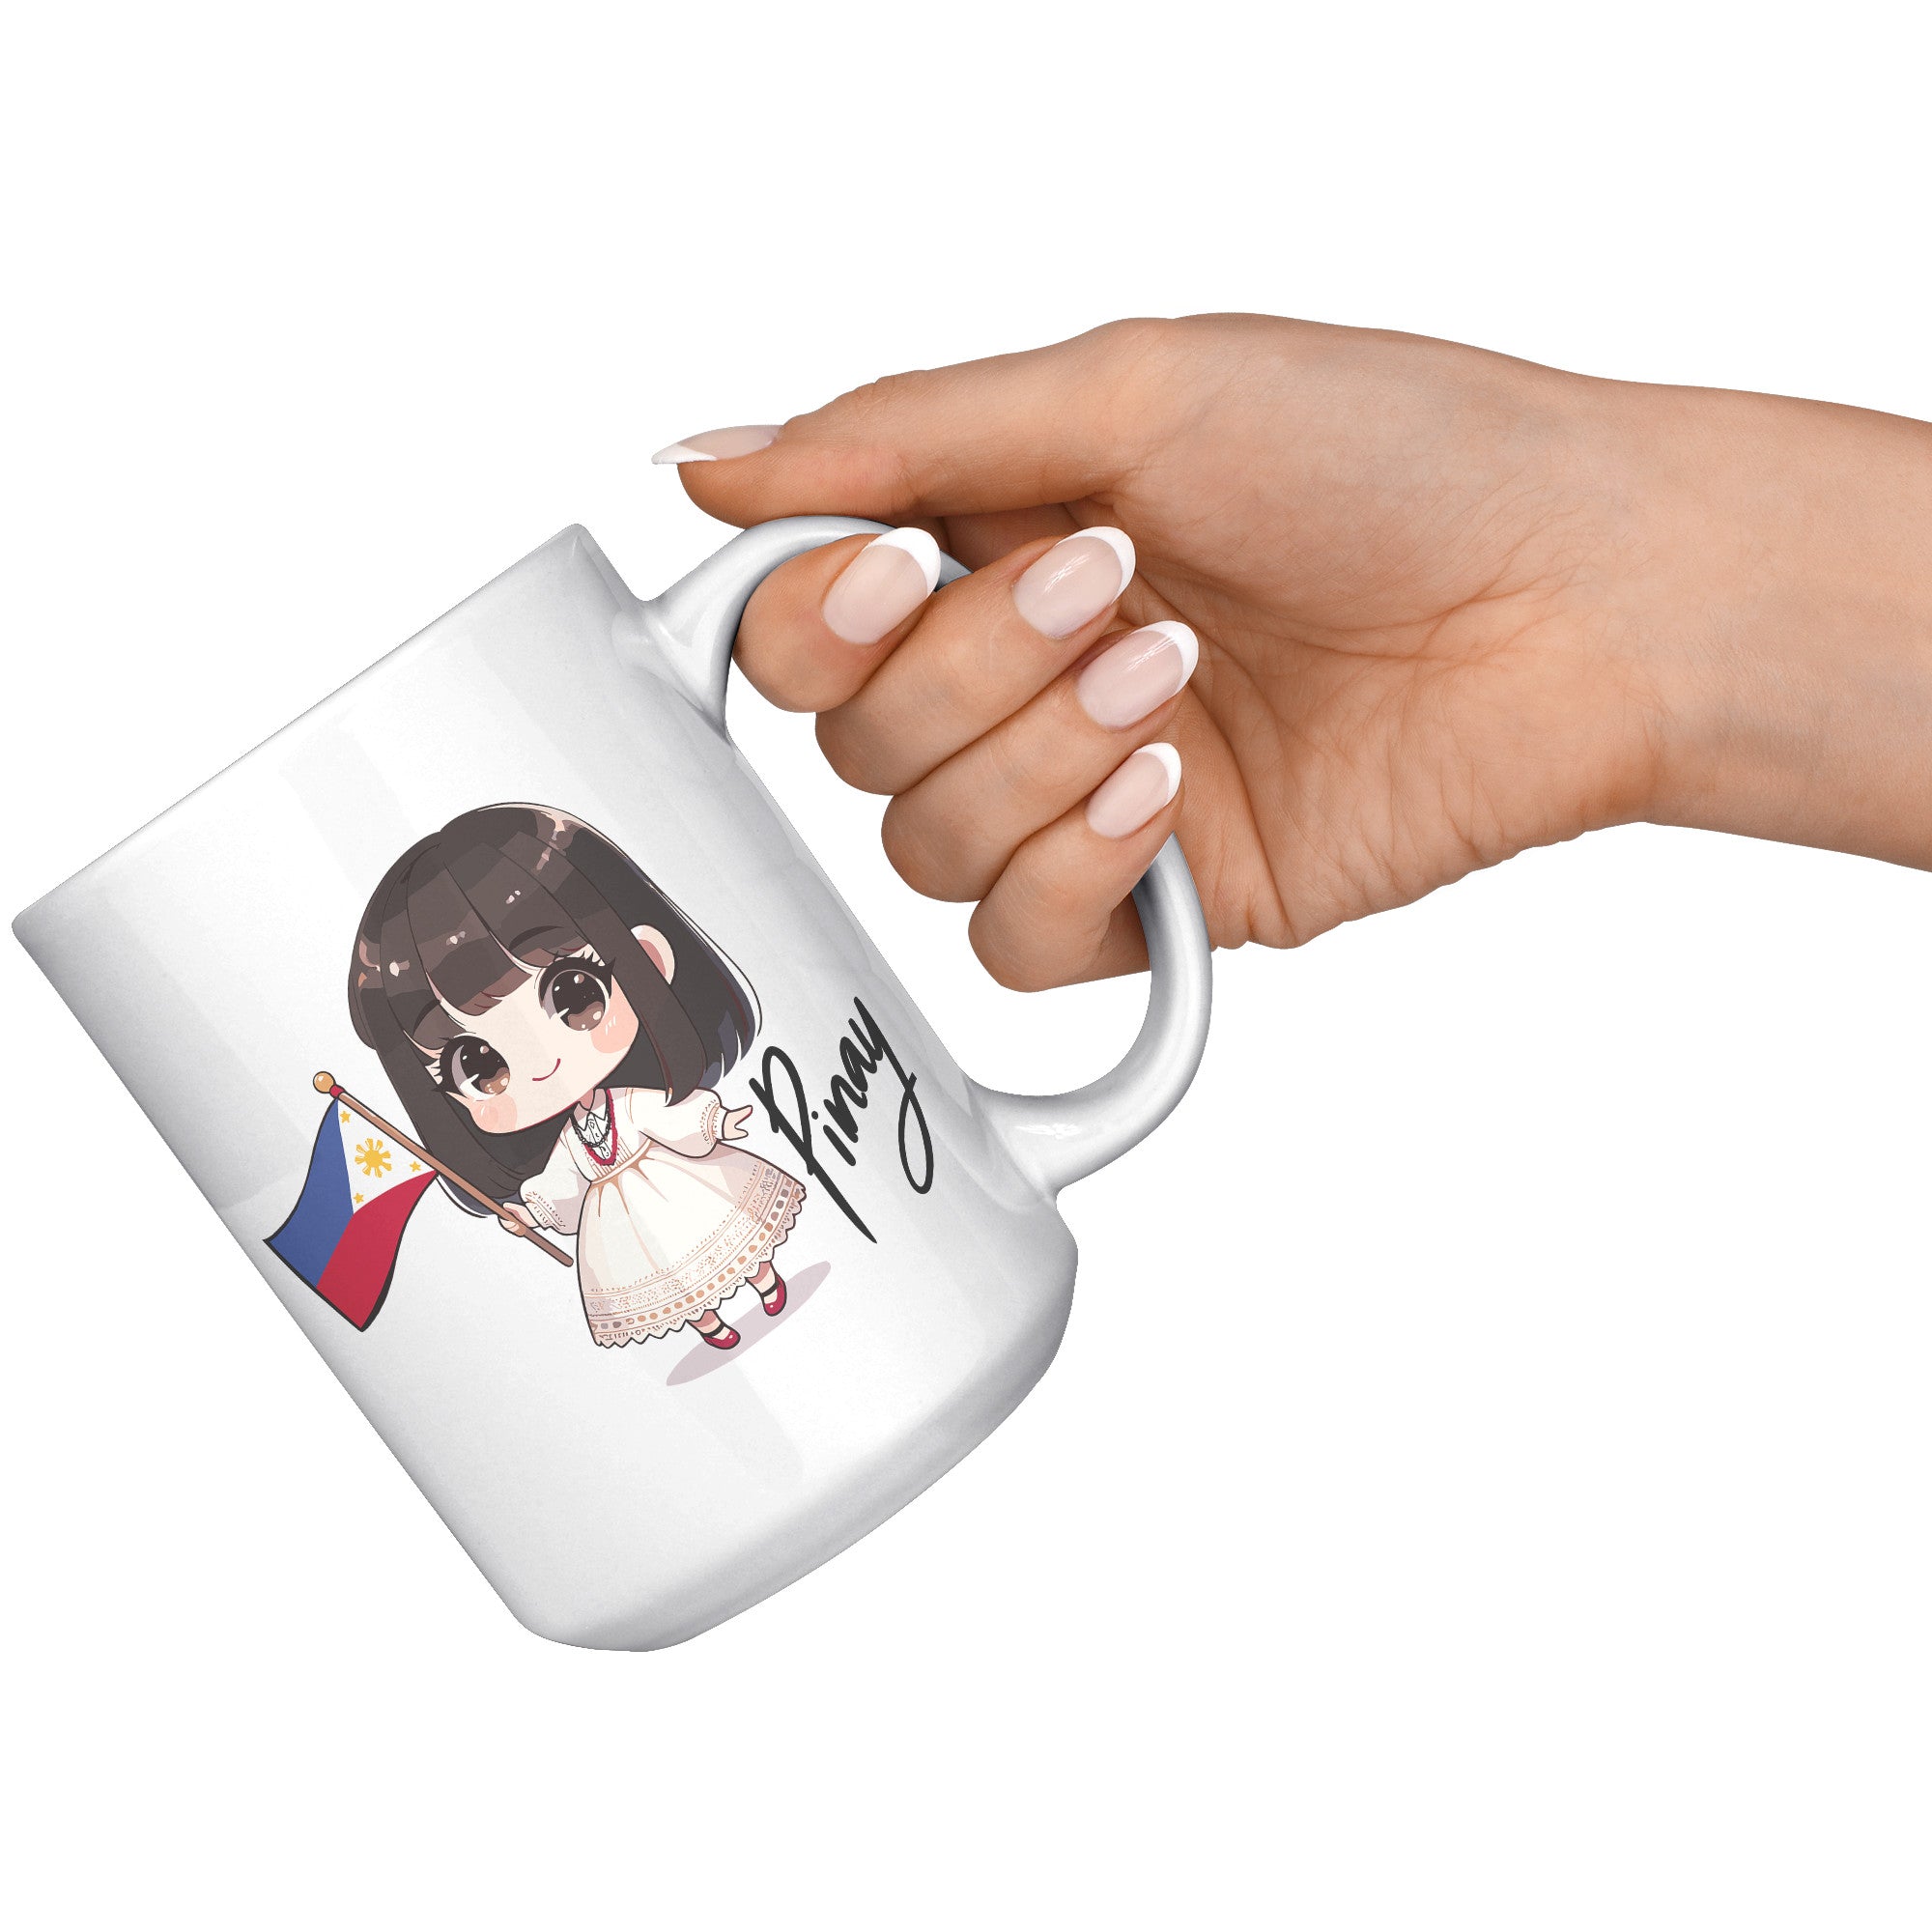 "Cute Cartoon Filipino Pride Coffee Mug - Vibrant Pinoy Pride Cup - Perfect Gift for Filipinos - Colorful Philippines Heritage Mug" - I1